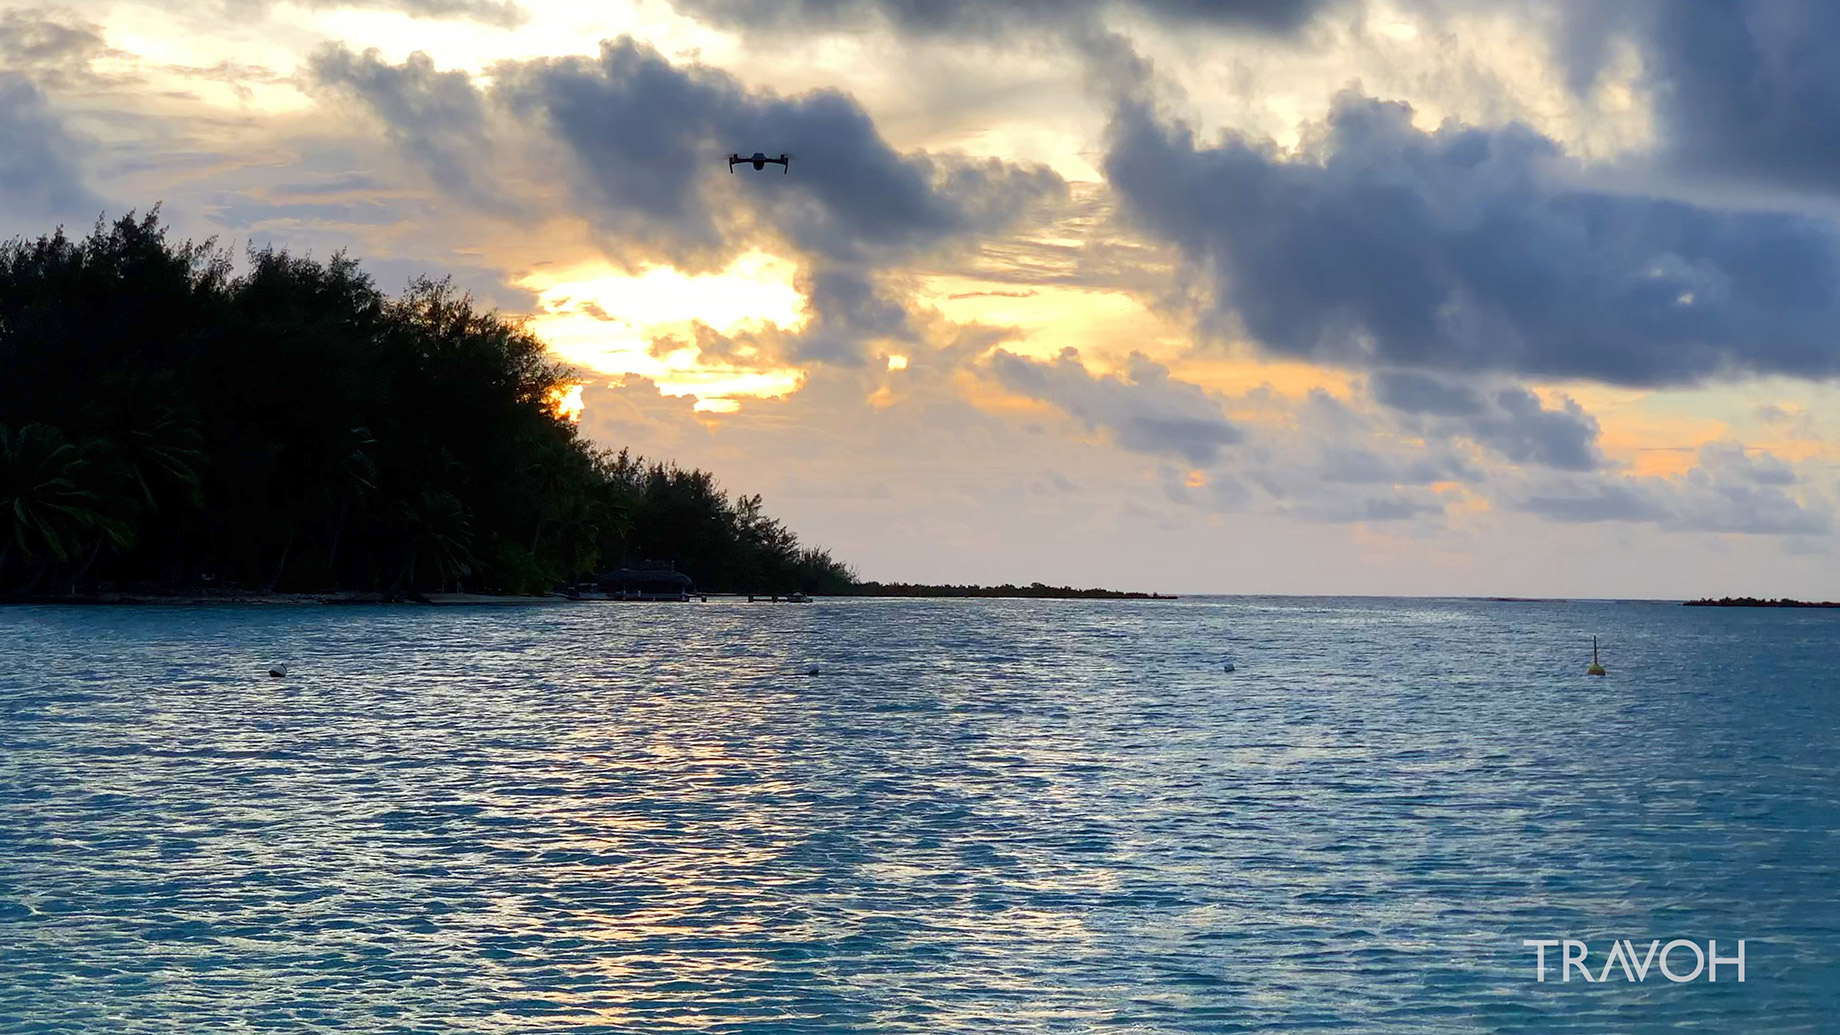 Drone Flying at Sunset - Blue Heaven Island - Motu Paahi - Bora Bora, French Polynesia - 4K Travel Video